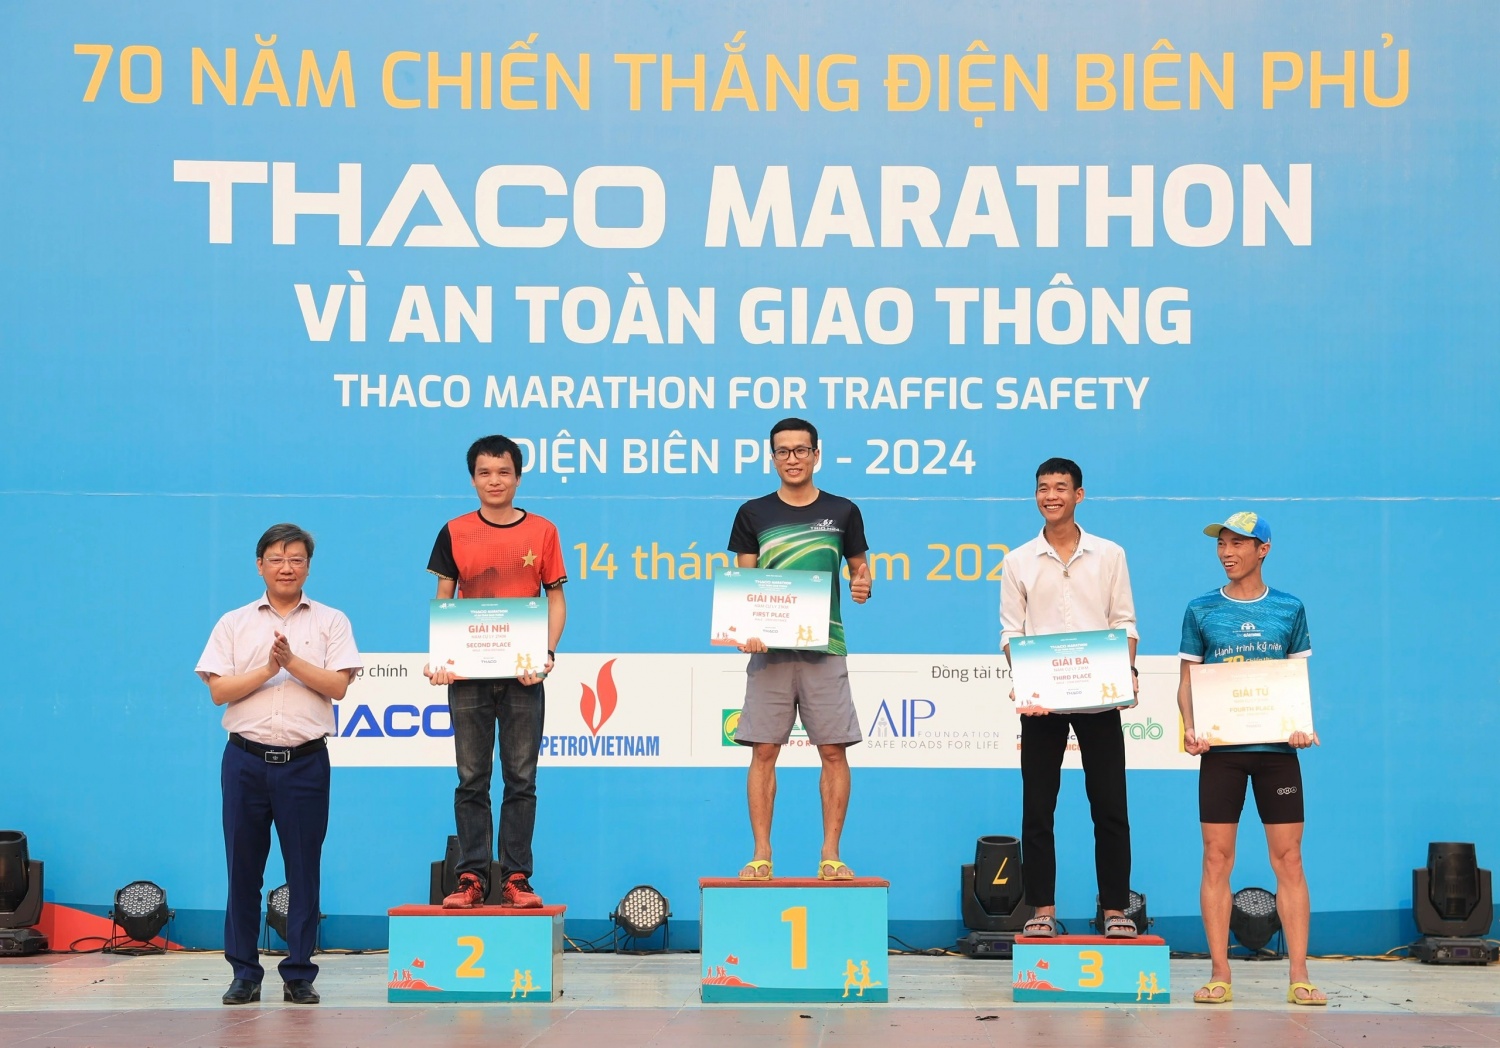 petrovietnam dong hanh cung giai chay thaco marathon vi an toan giao thong  dien bien phu 2024 hinh 14